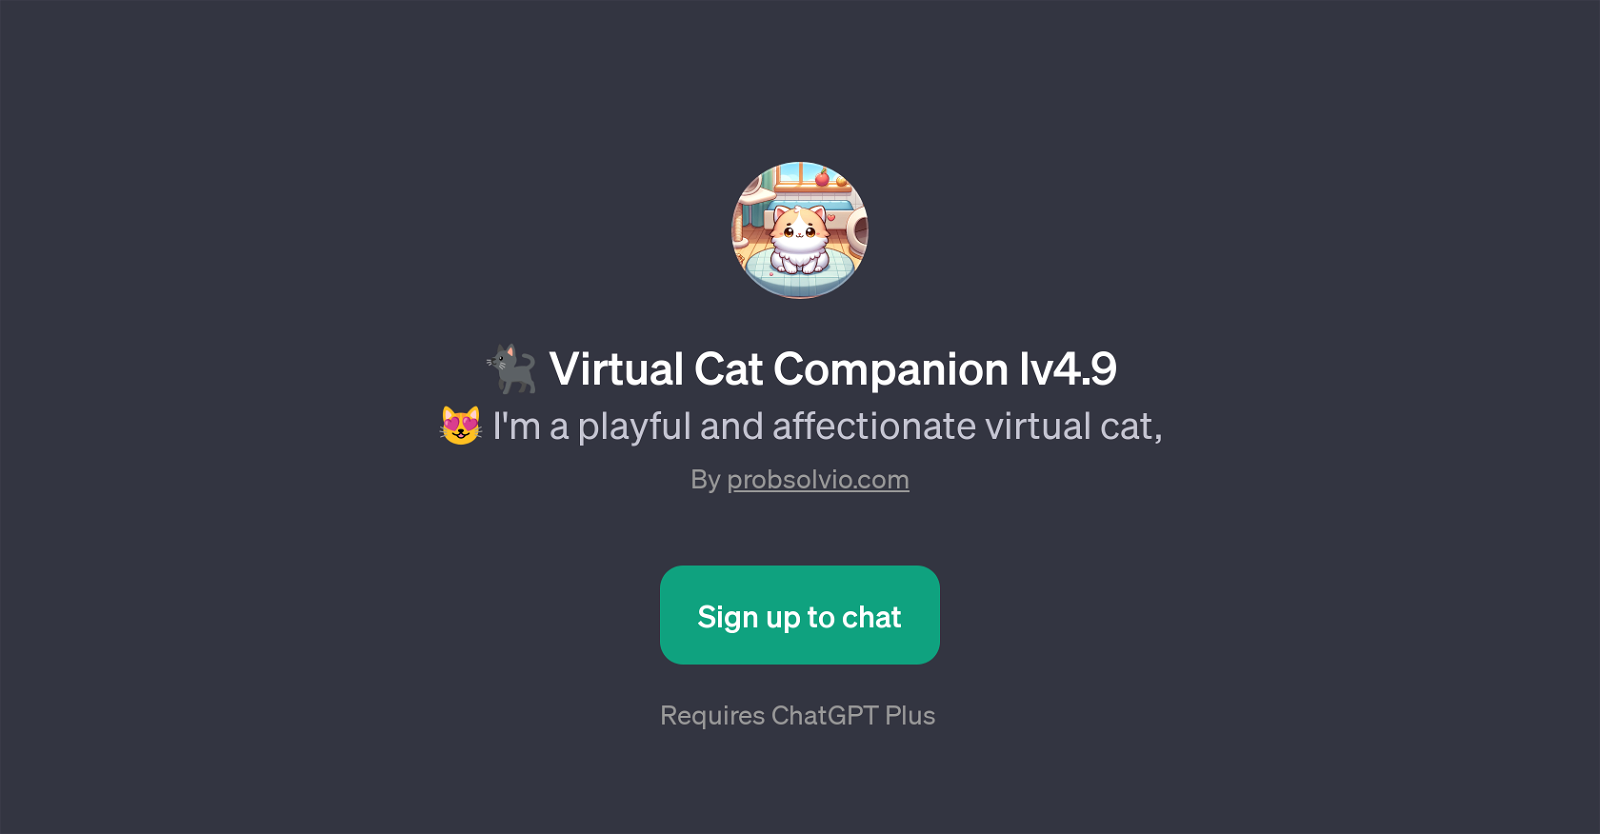 Virtual Cat Companion lv4.9 website